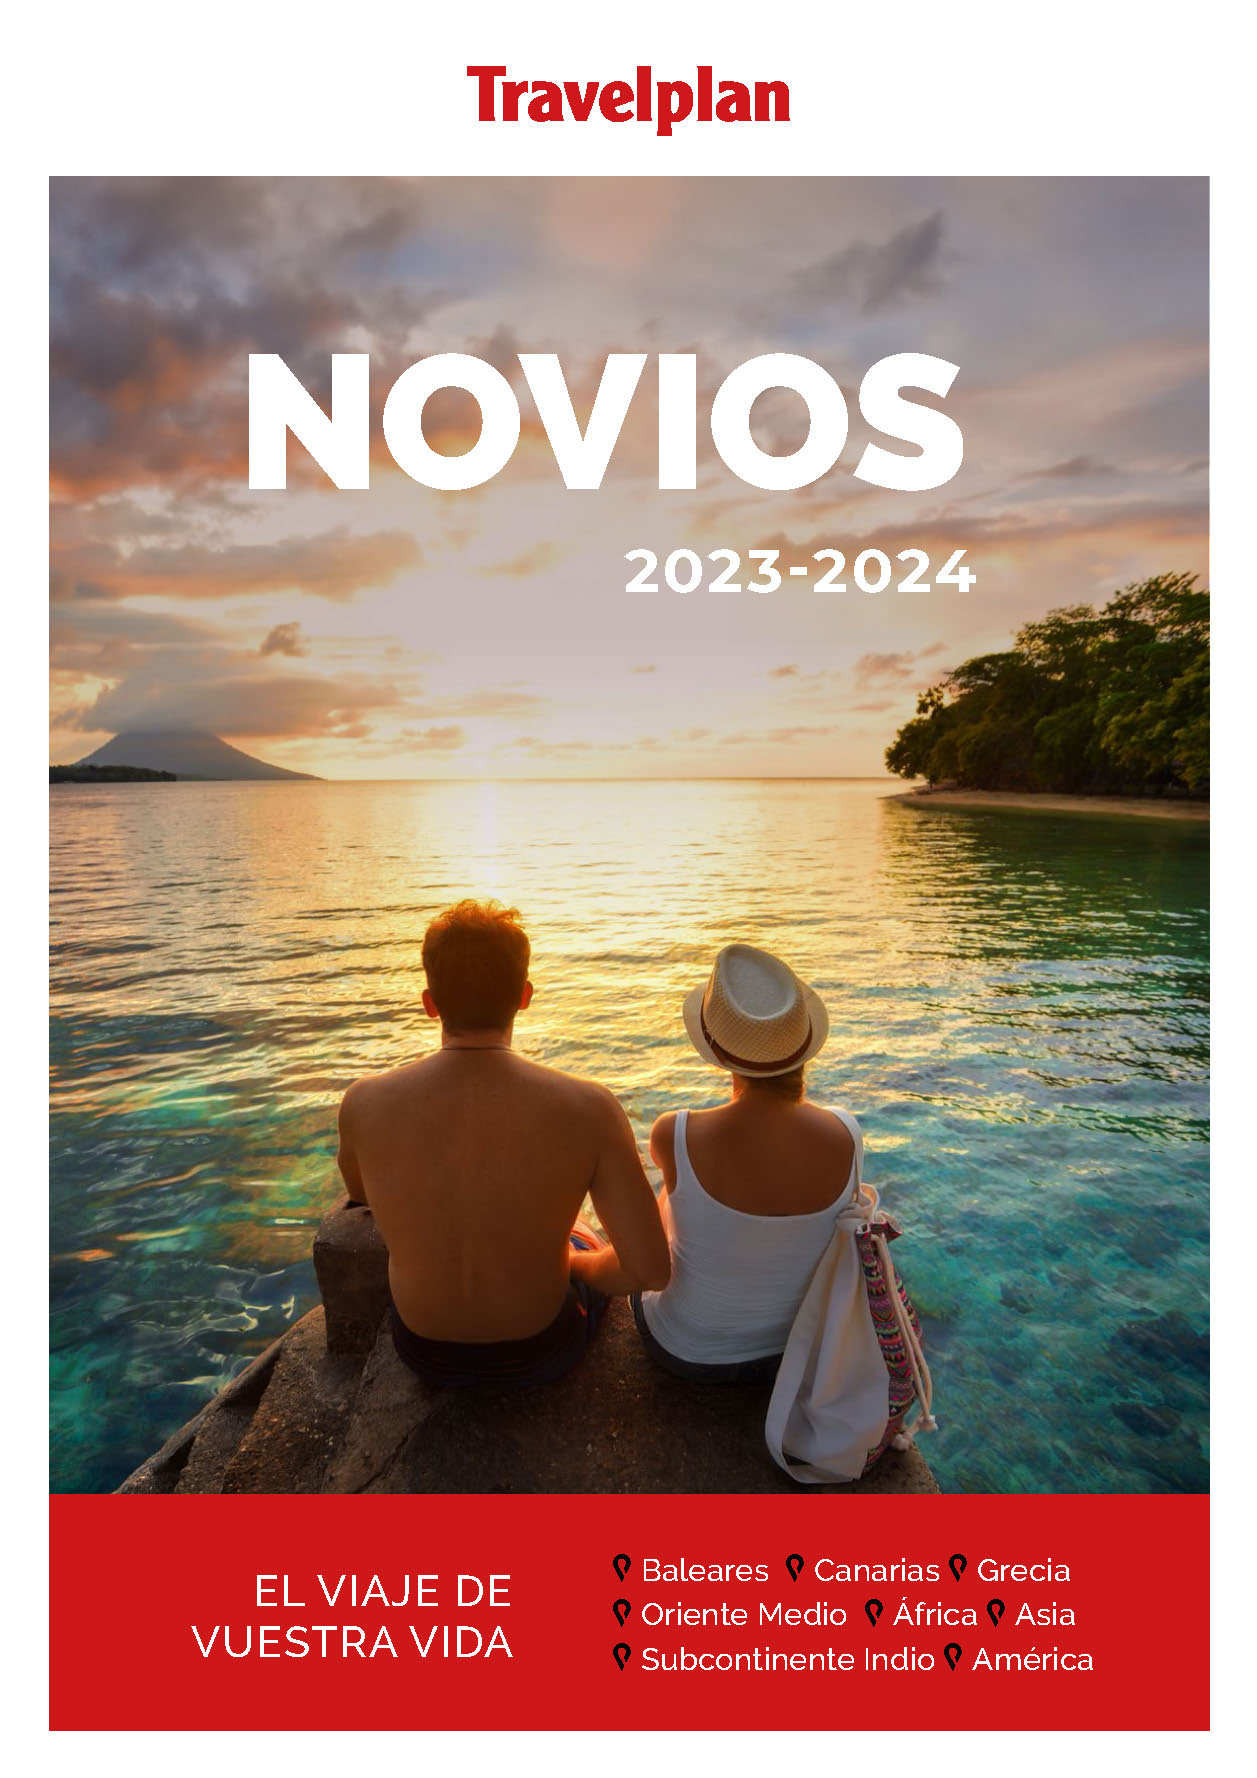 Ofertas Travelplan Viajes de Novios 2023-2024 viajes a Baleares Canarias Grecia Oriente Medio Africa Asia America